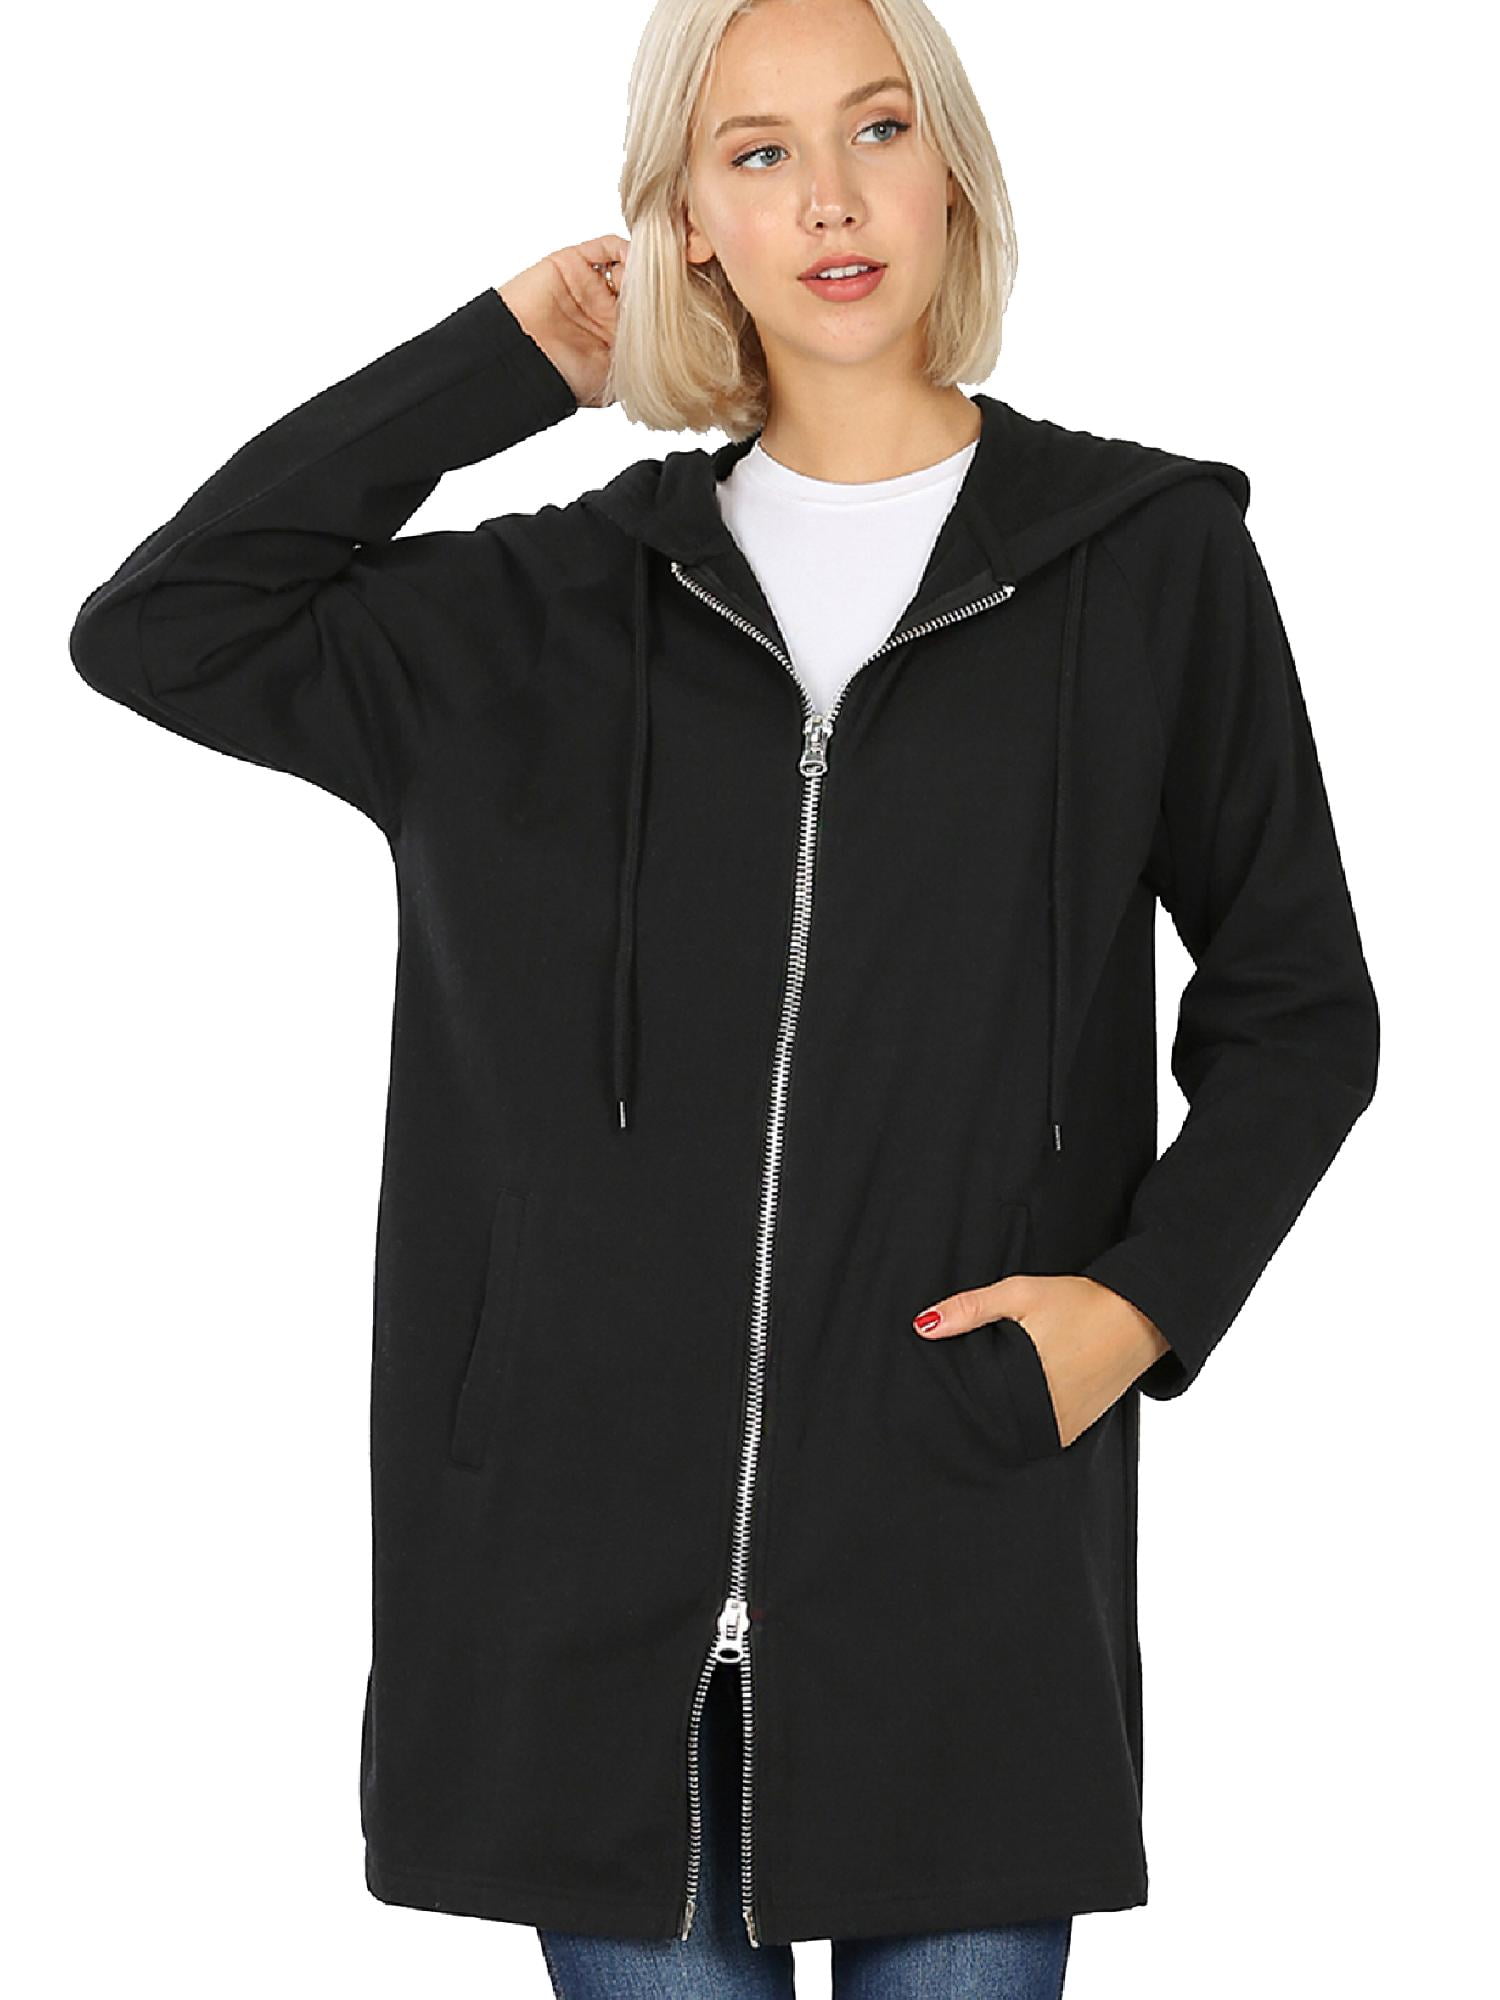 MixMatchy Women's Casual Loose Fit Long Sleeve Zip Up Pullover Hoodie Tunic Sweatshirt Jacket (S-3X) - Walmart.com